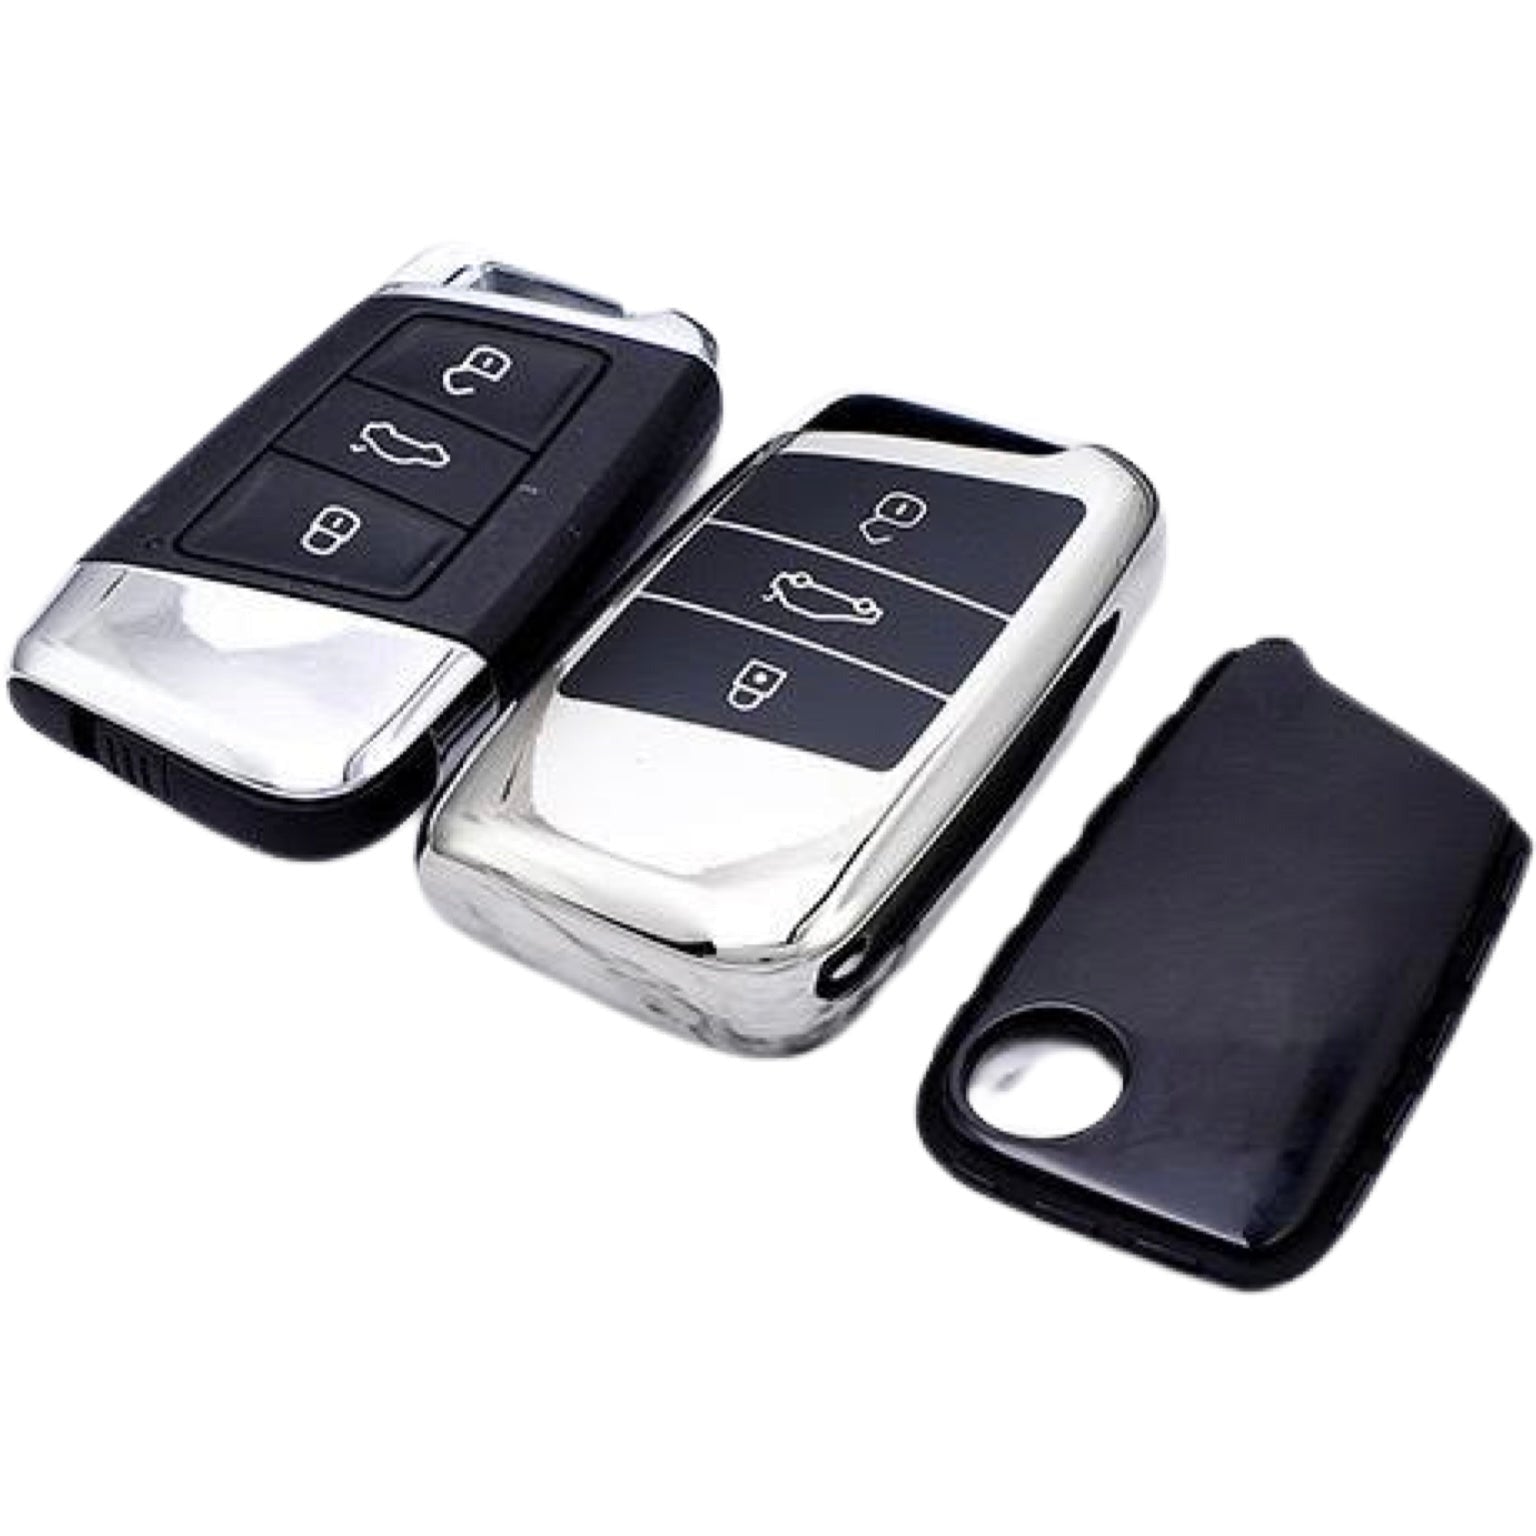 Volkswagen car key cover | Key fob cover for VW Golf, Passat, Arteon | Volkswagen Accessories - Keysleeves